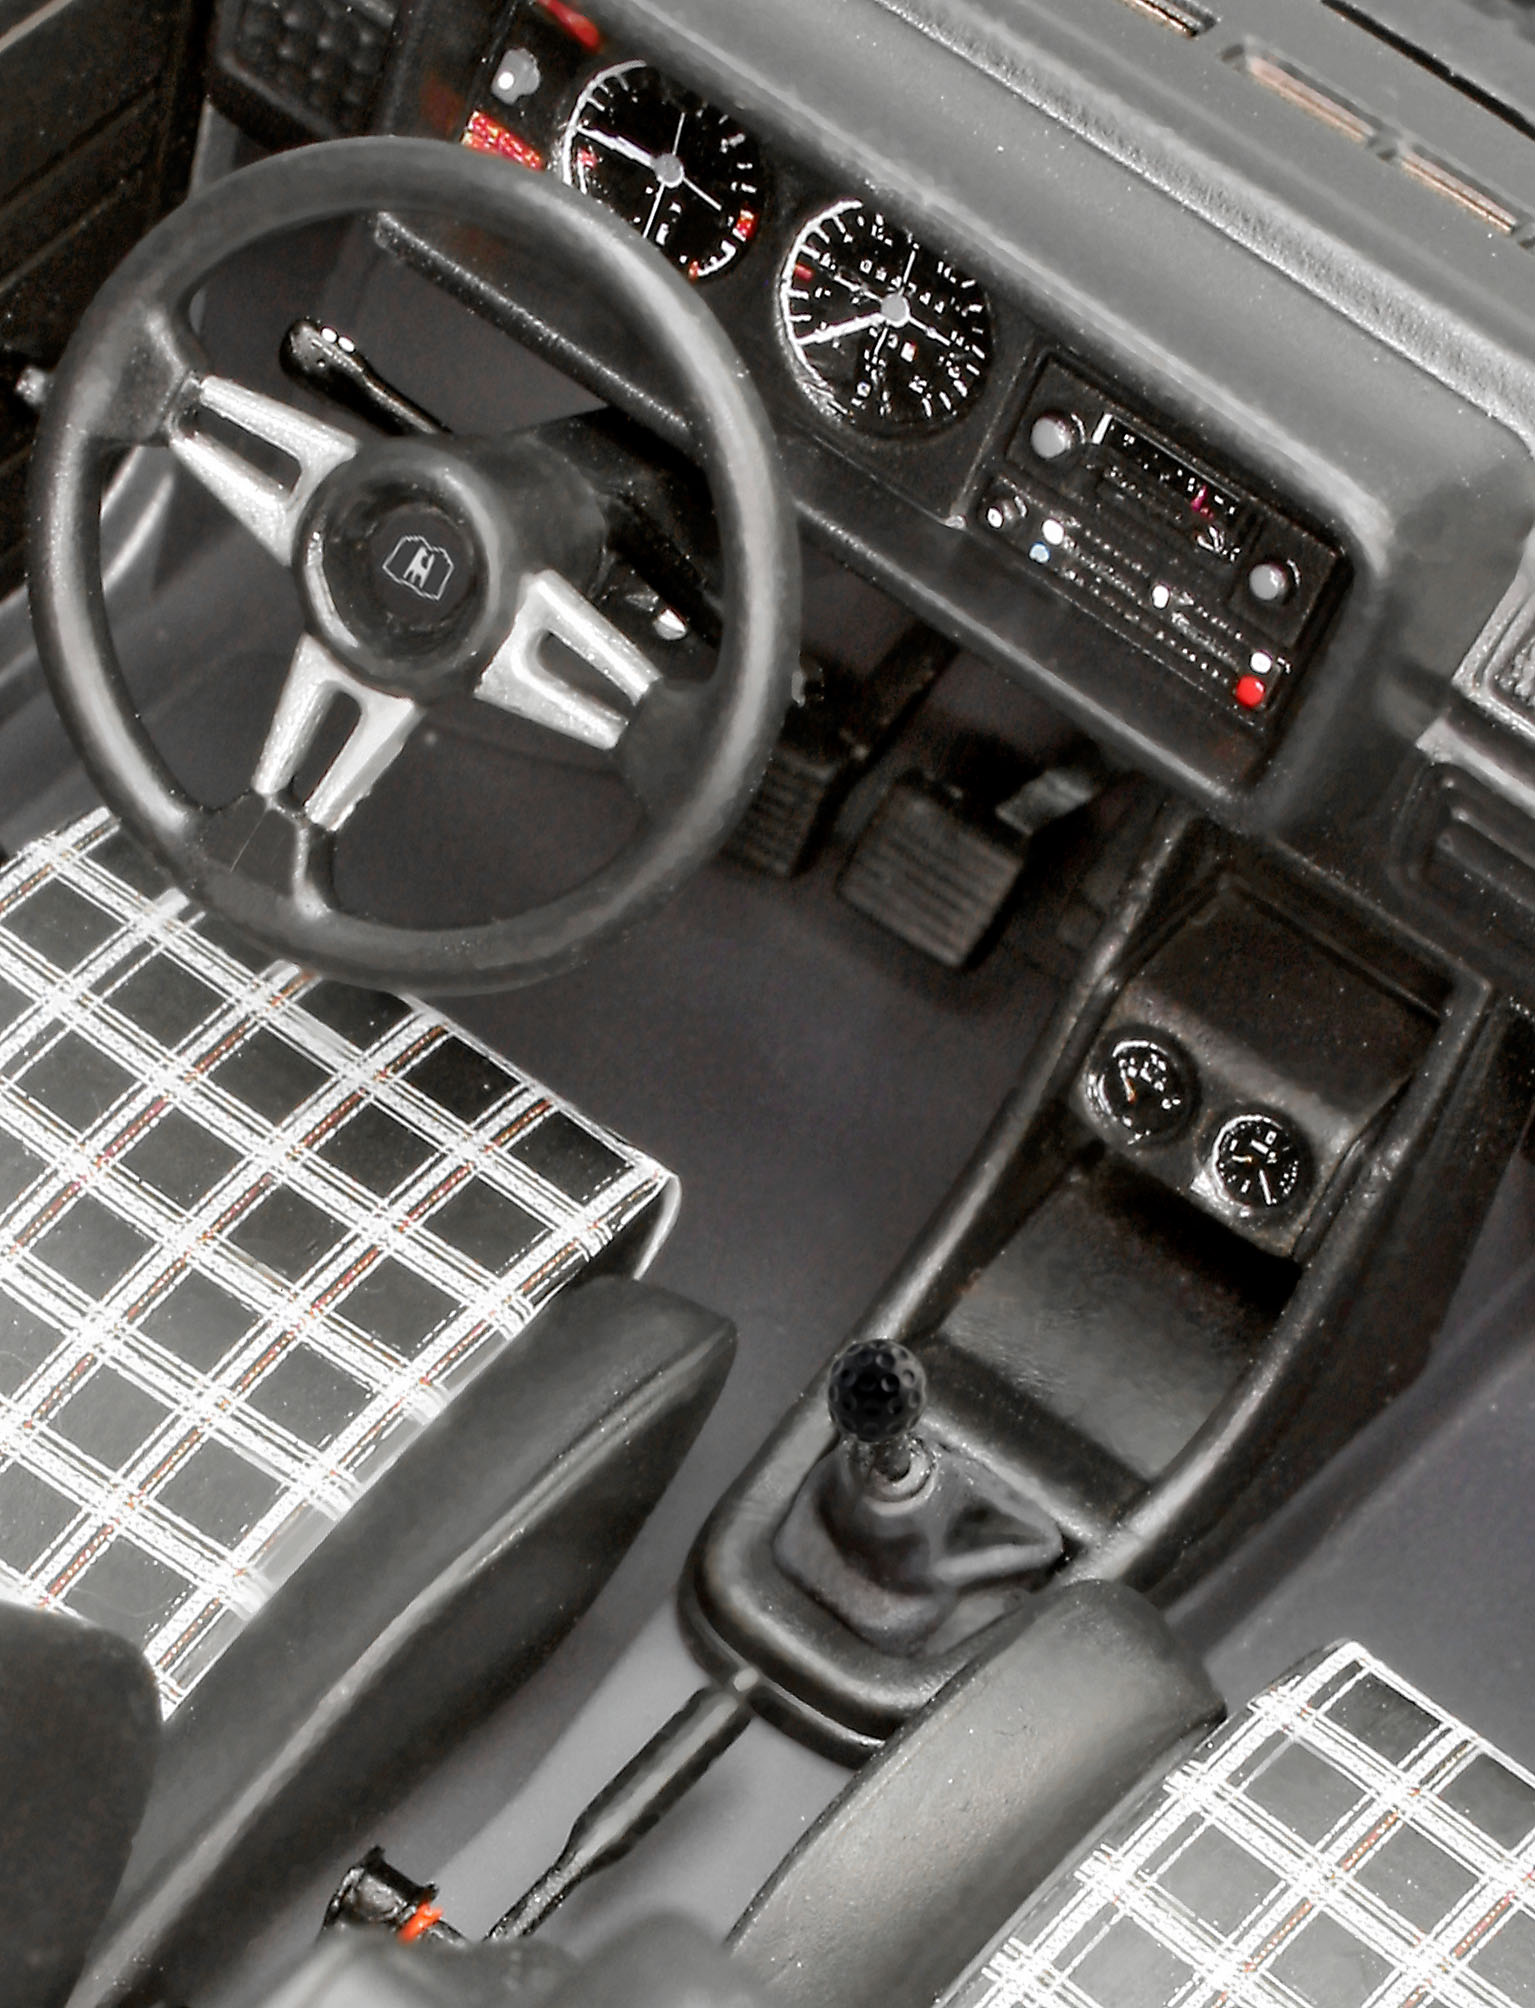 Modellbausatz, Mehrfarbig 1 07072 Golf VW GTI REVELL